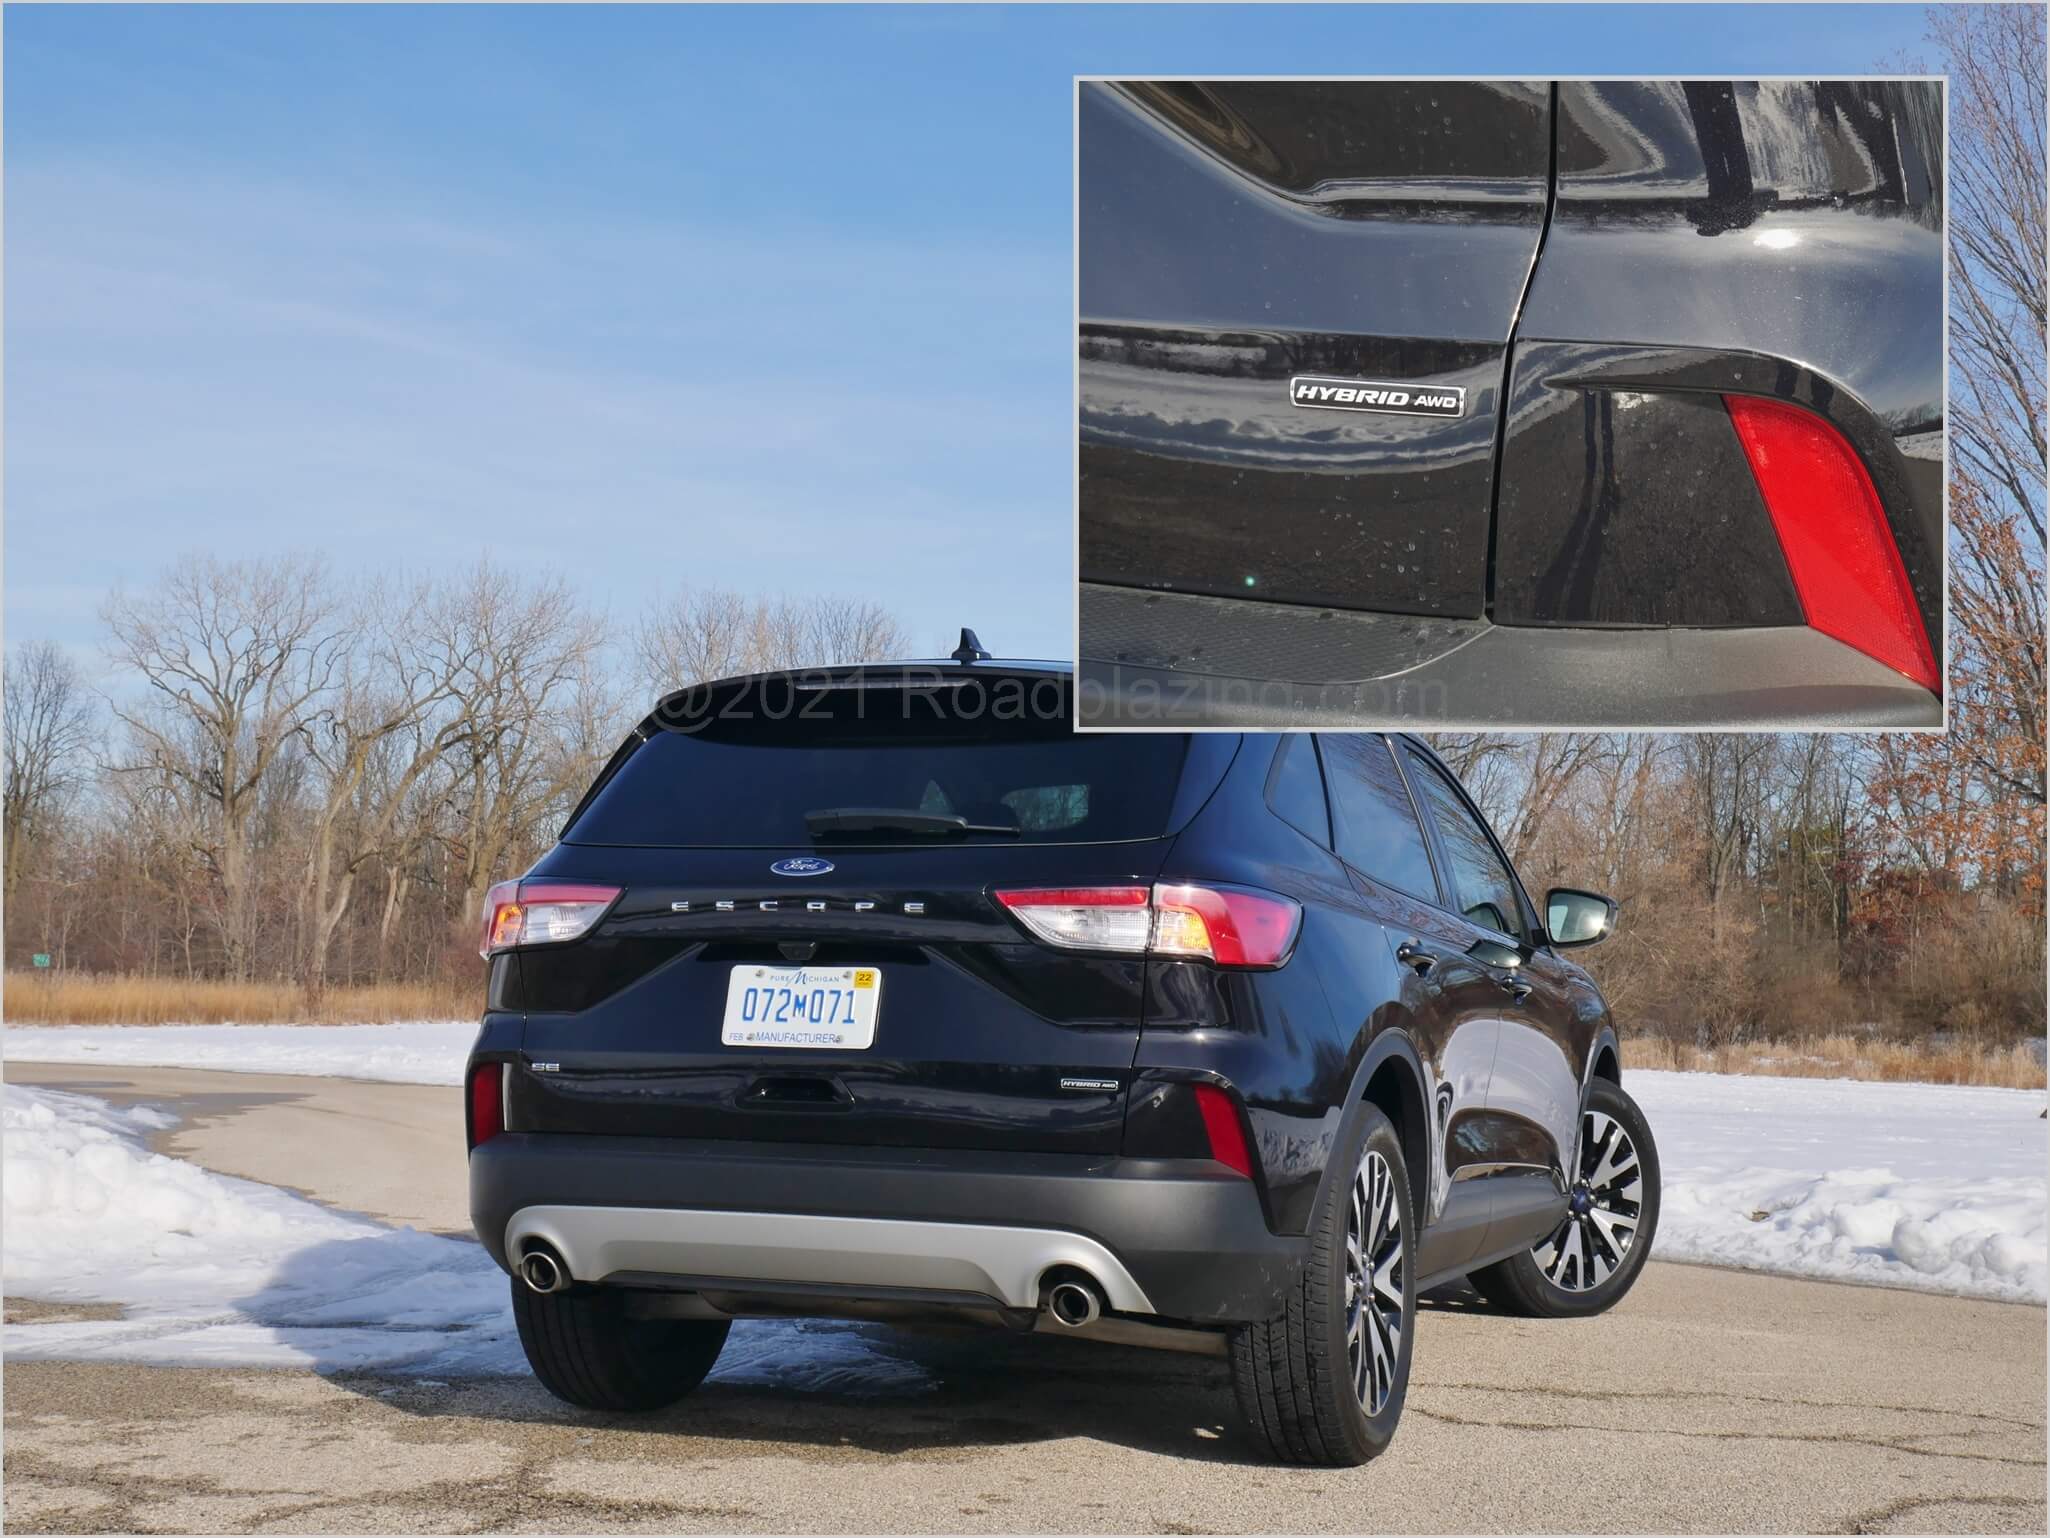 2020 Ford Escape SE Hybrid AWD: emblem identification